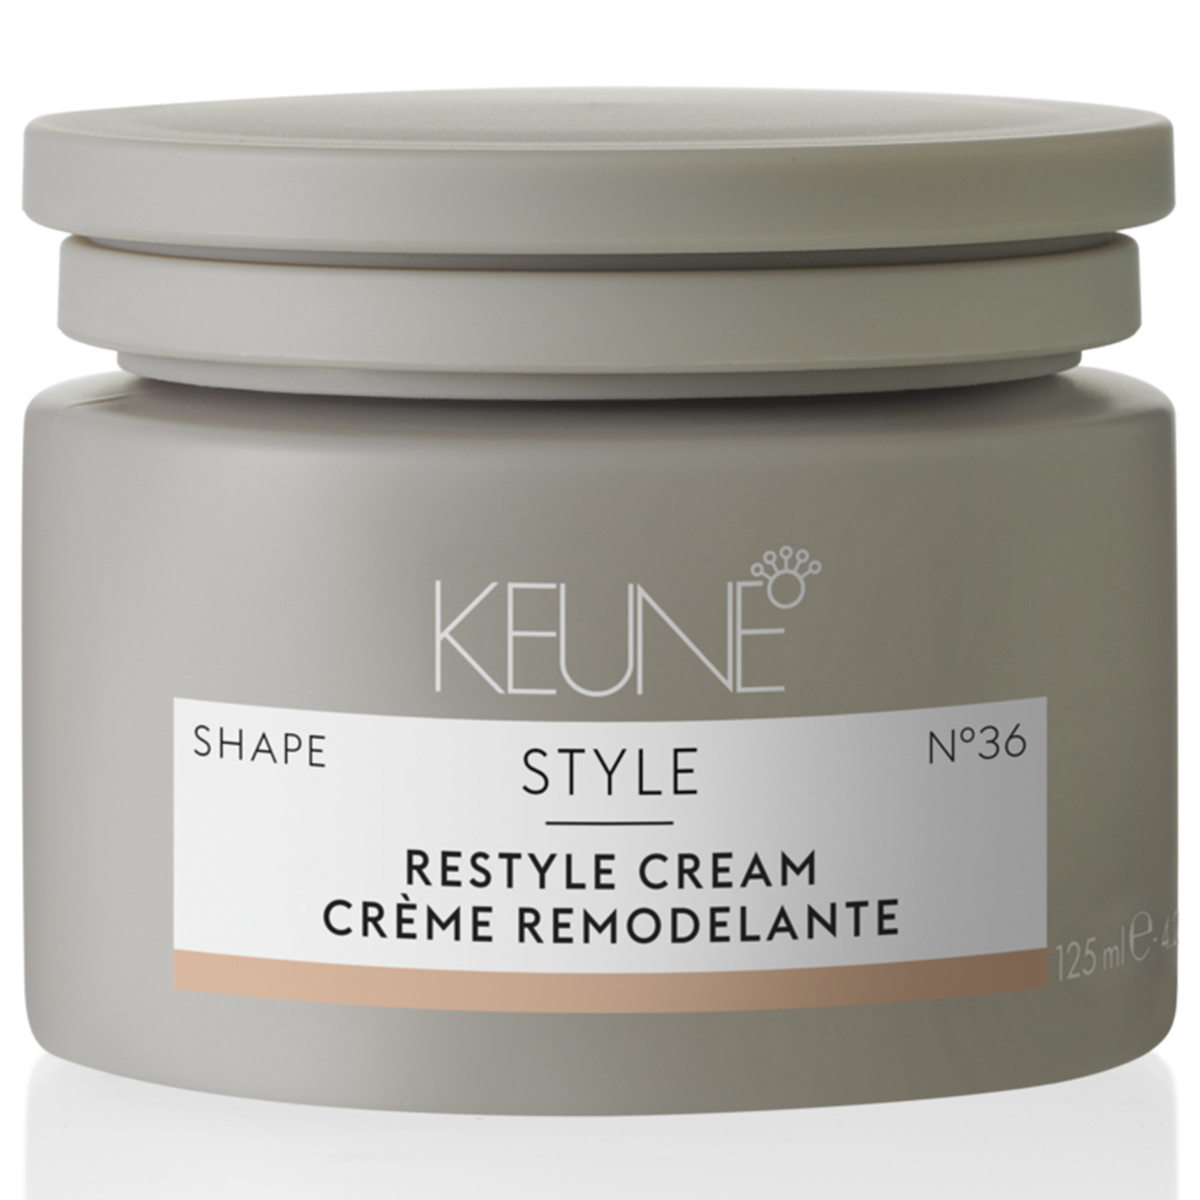 крем для рестайлинга style restyle cream 125мл Keune Крем для рестайлинга Restyle Cream №36, 125 мл (Keune, Style)